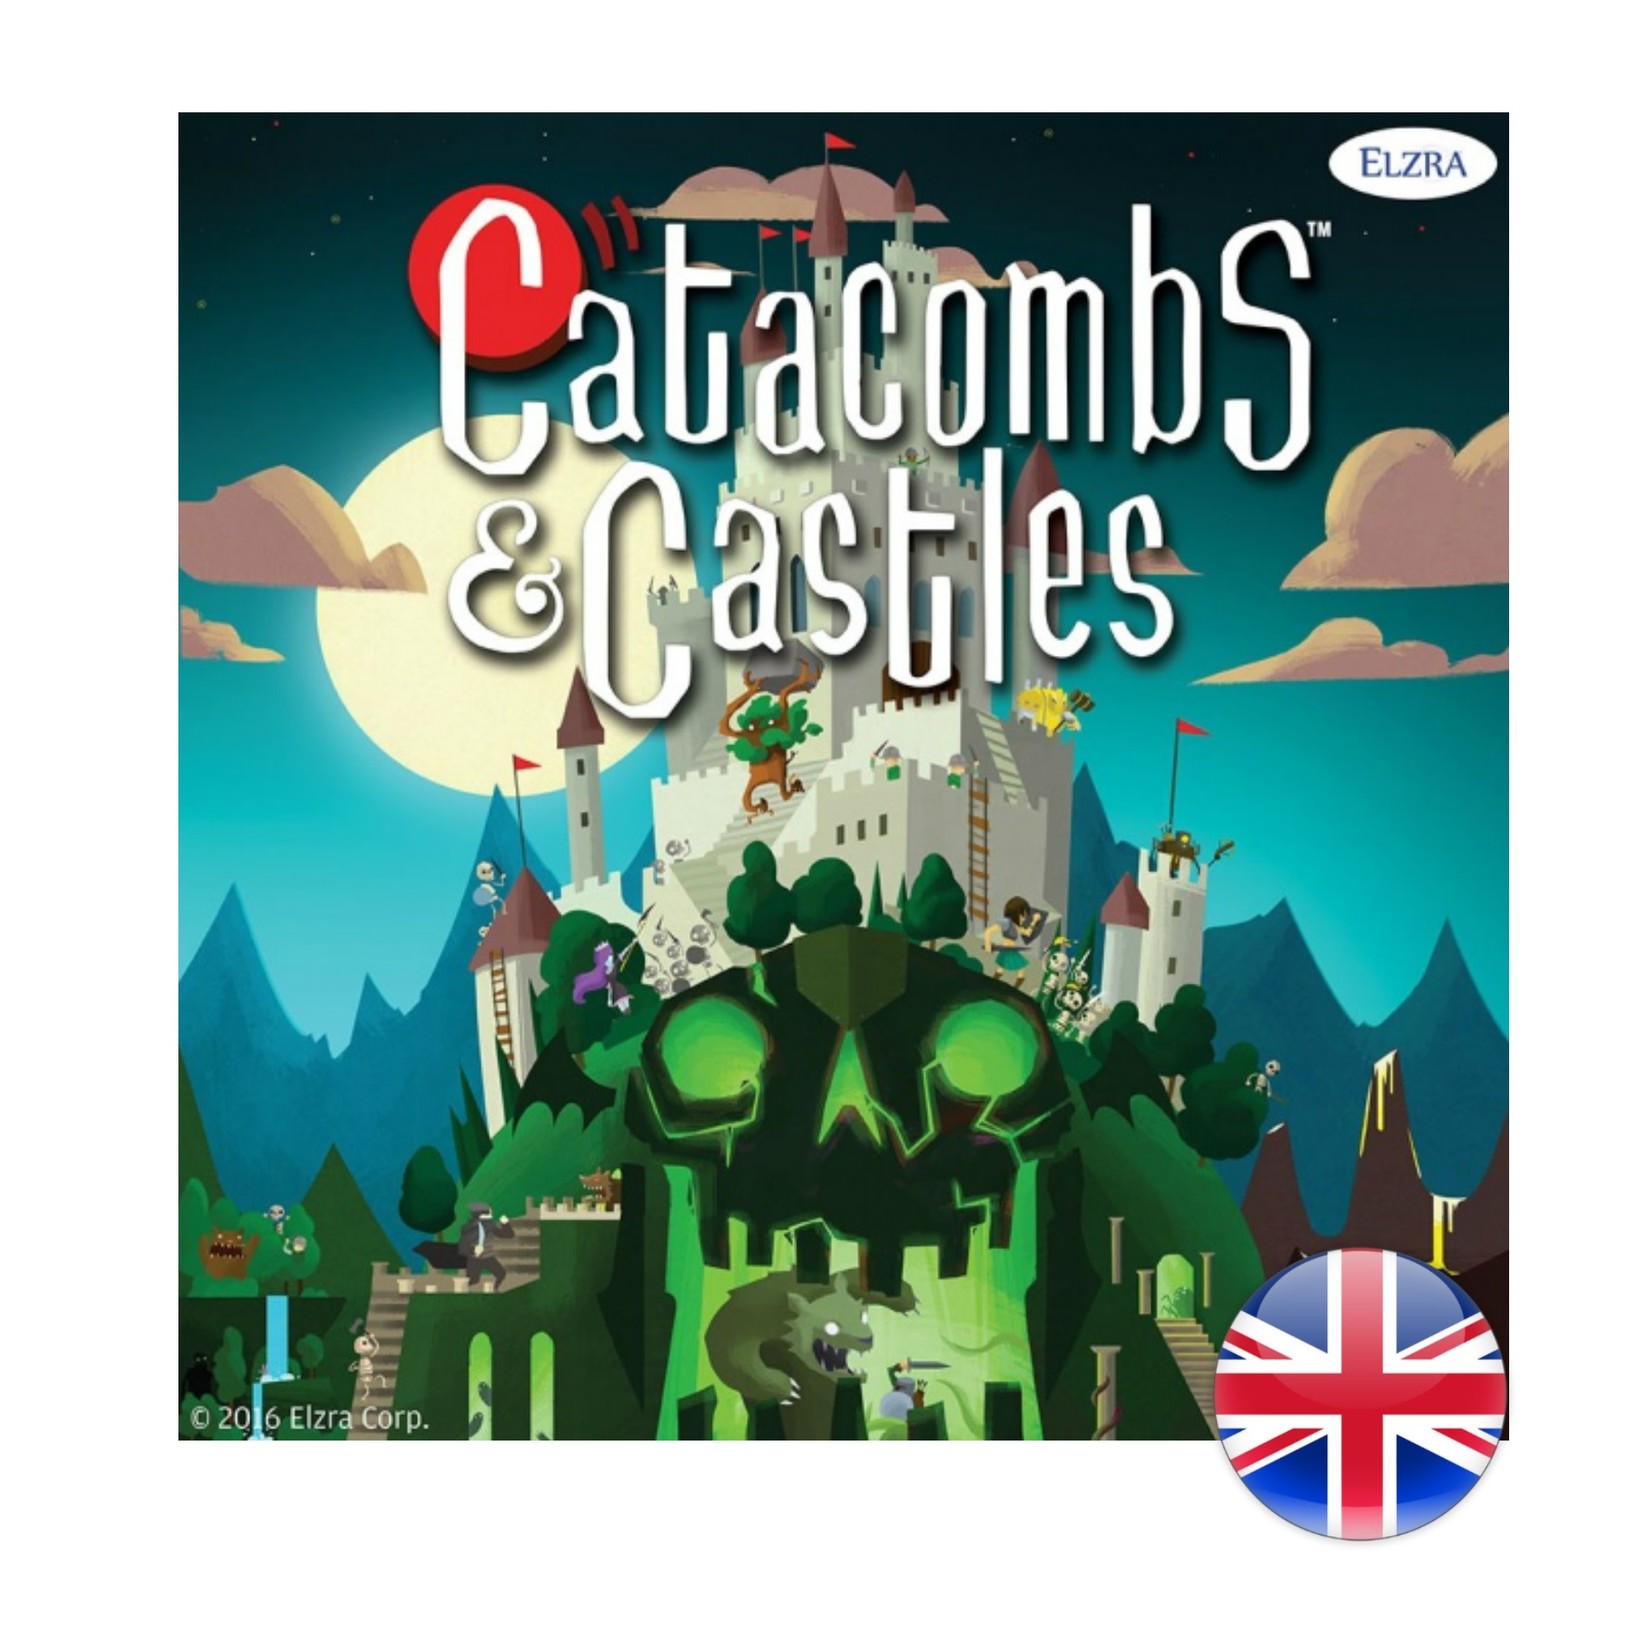 Elzra Catacombs & Castles